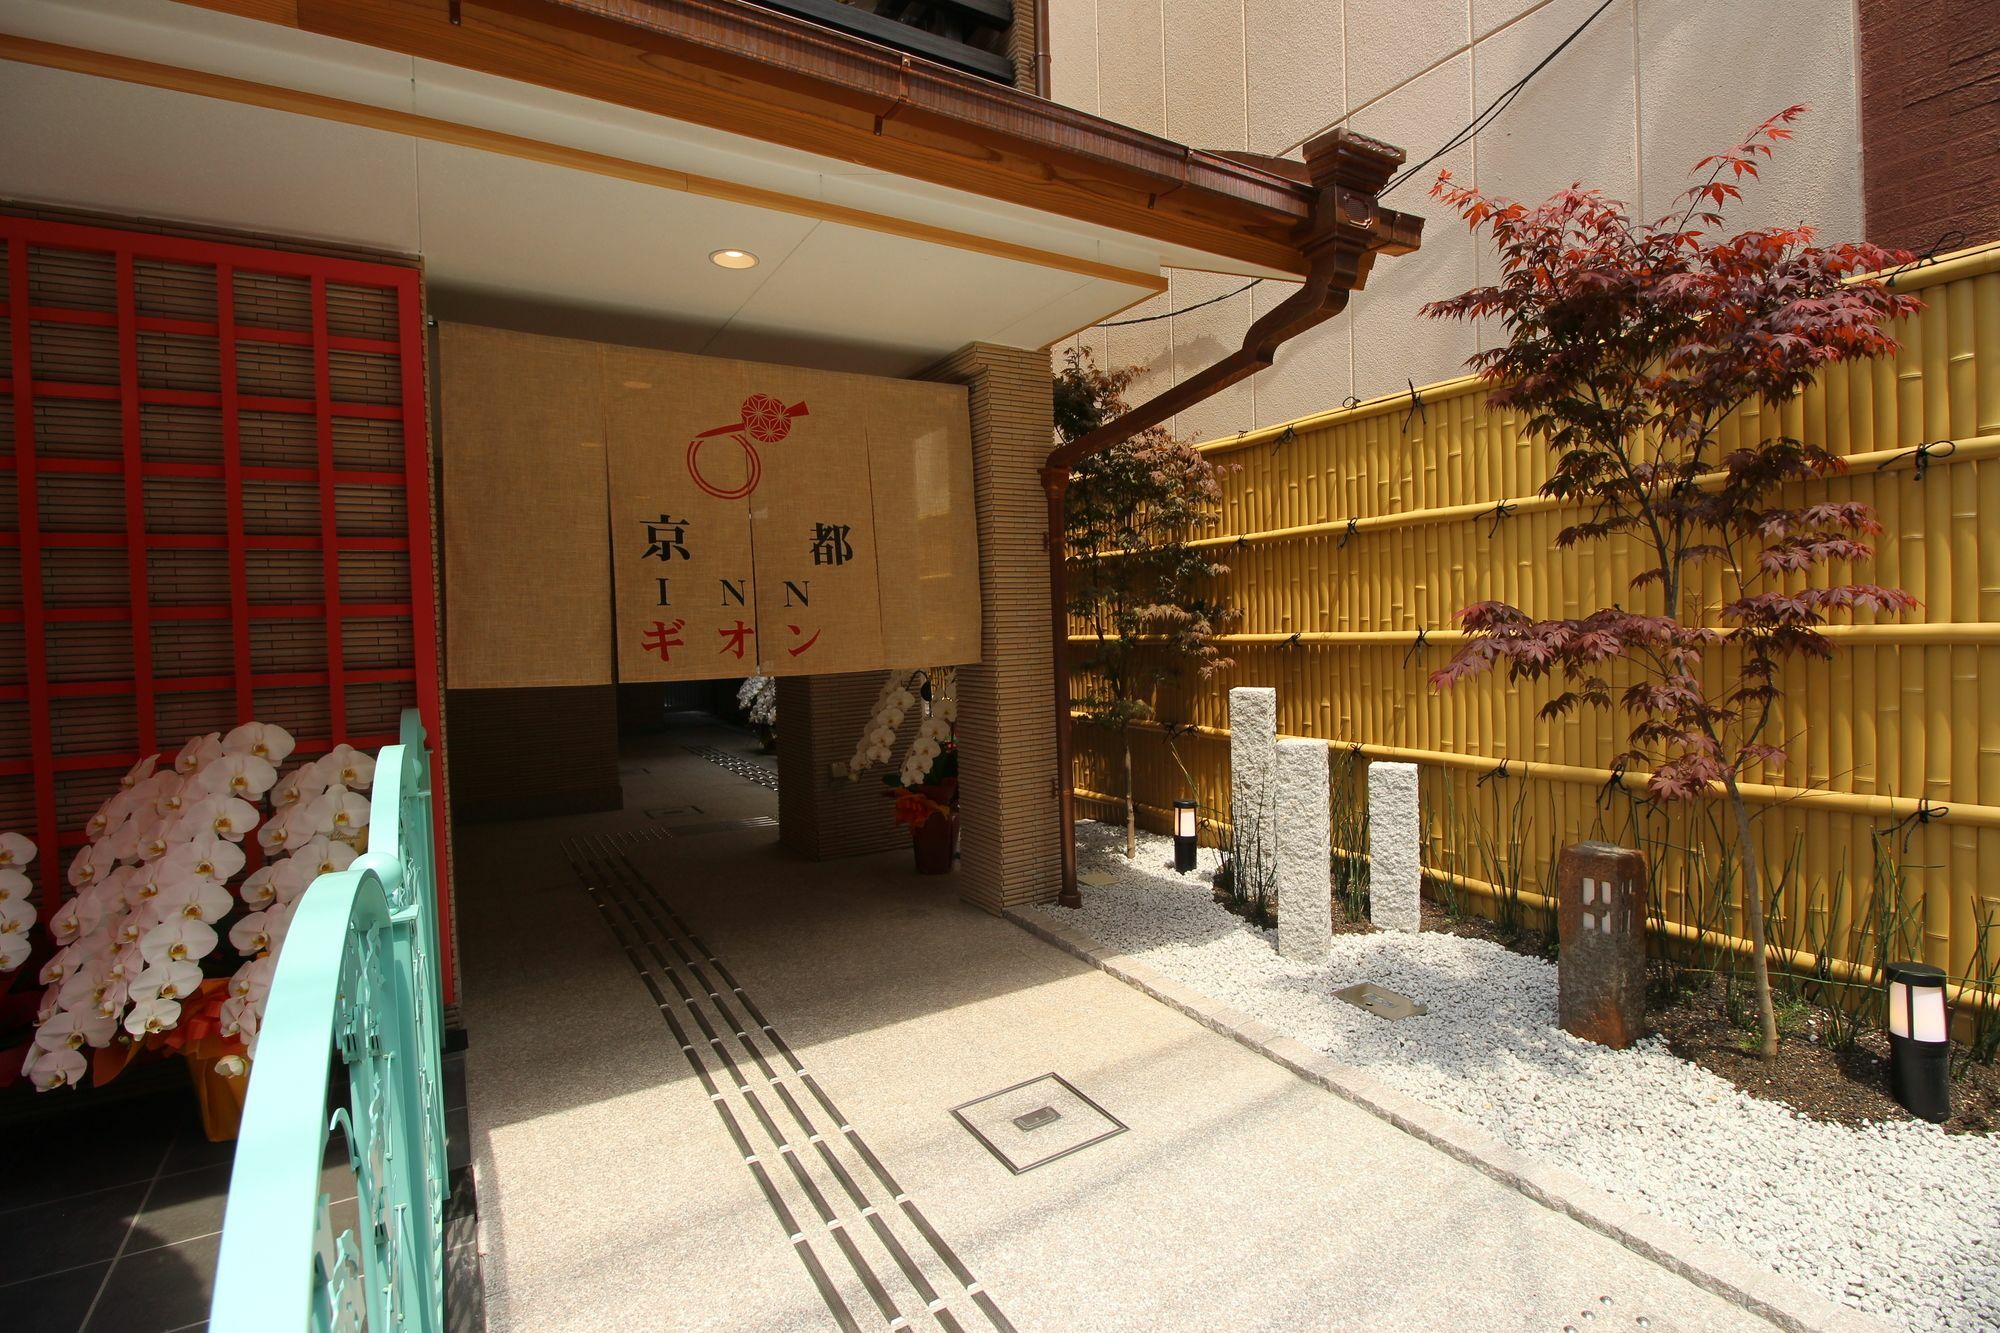 Kyoto Inn Gion Экстерьер фото